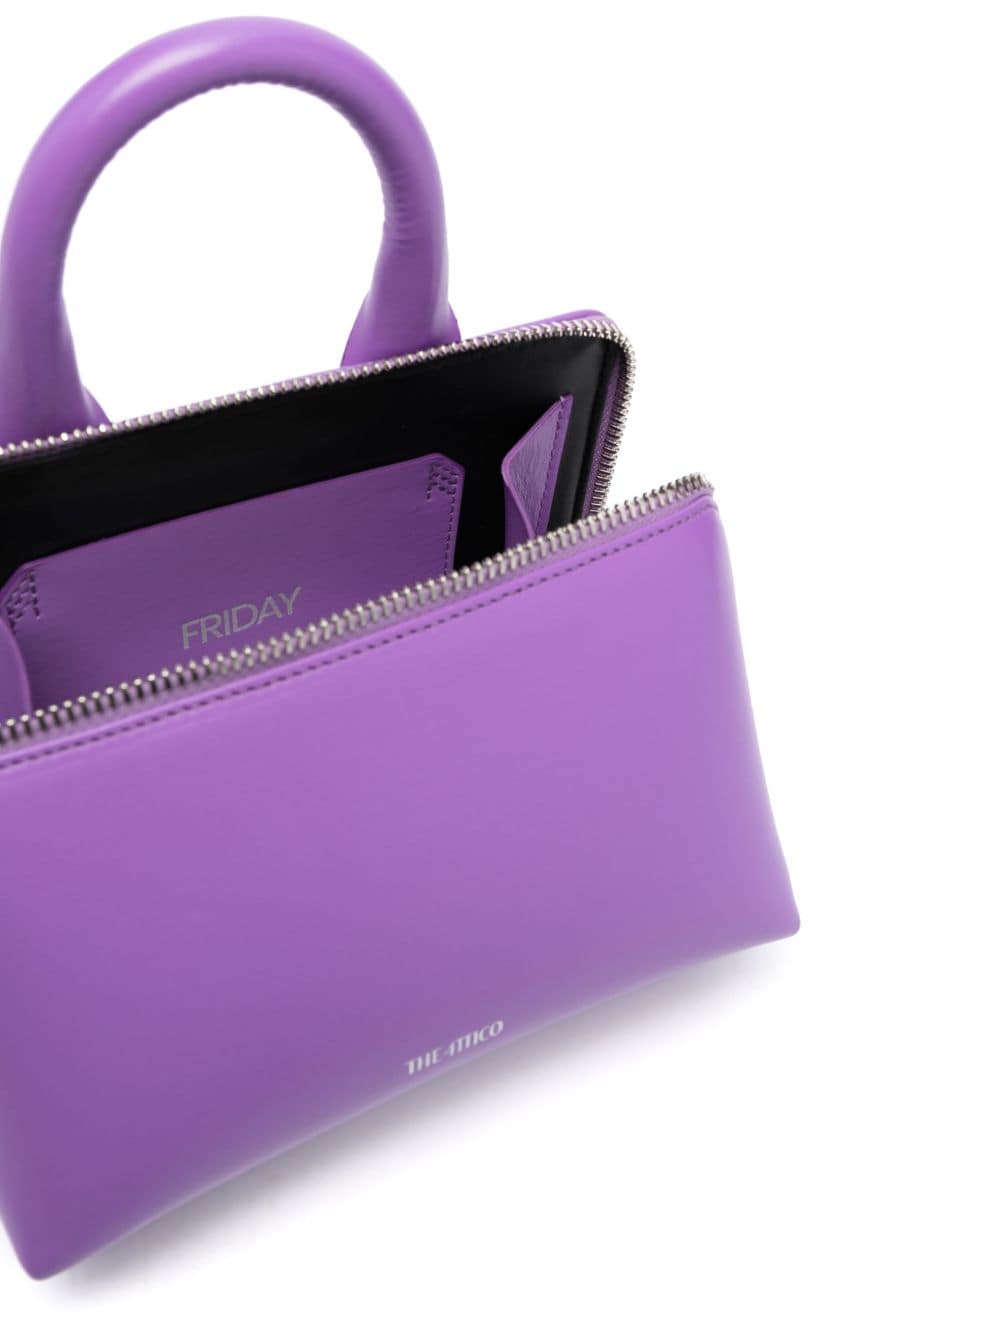 The Attico Bags for Women - Shop on FARFETCH